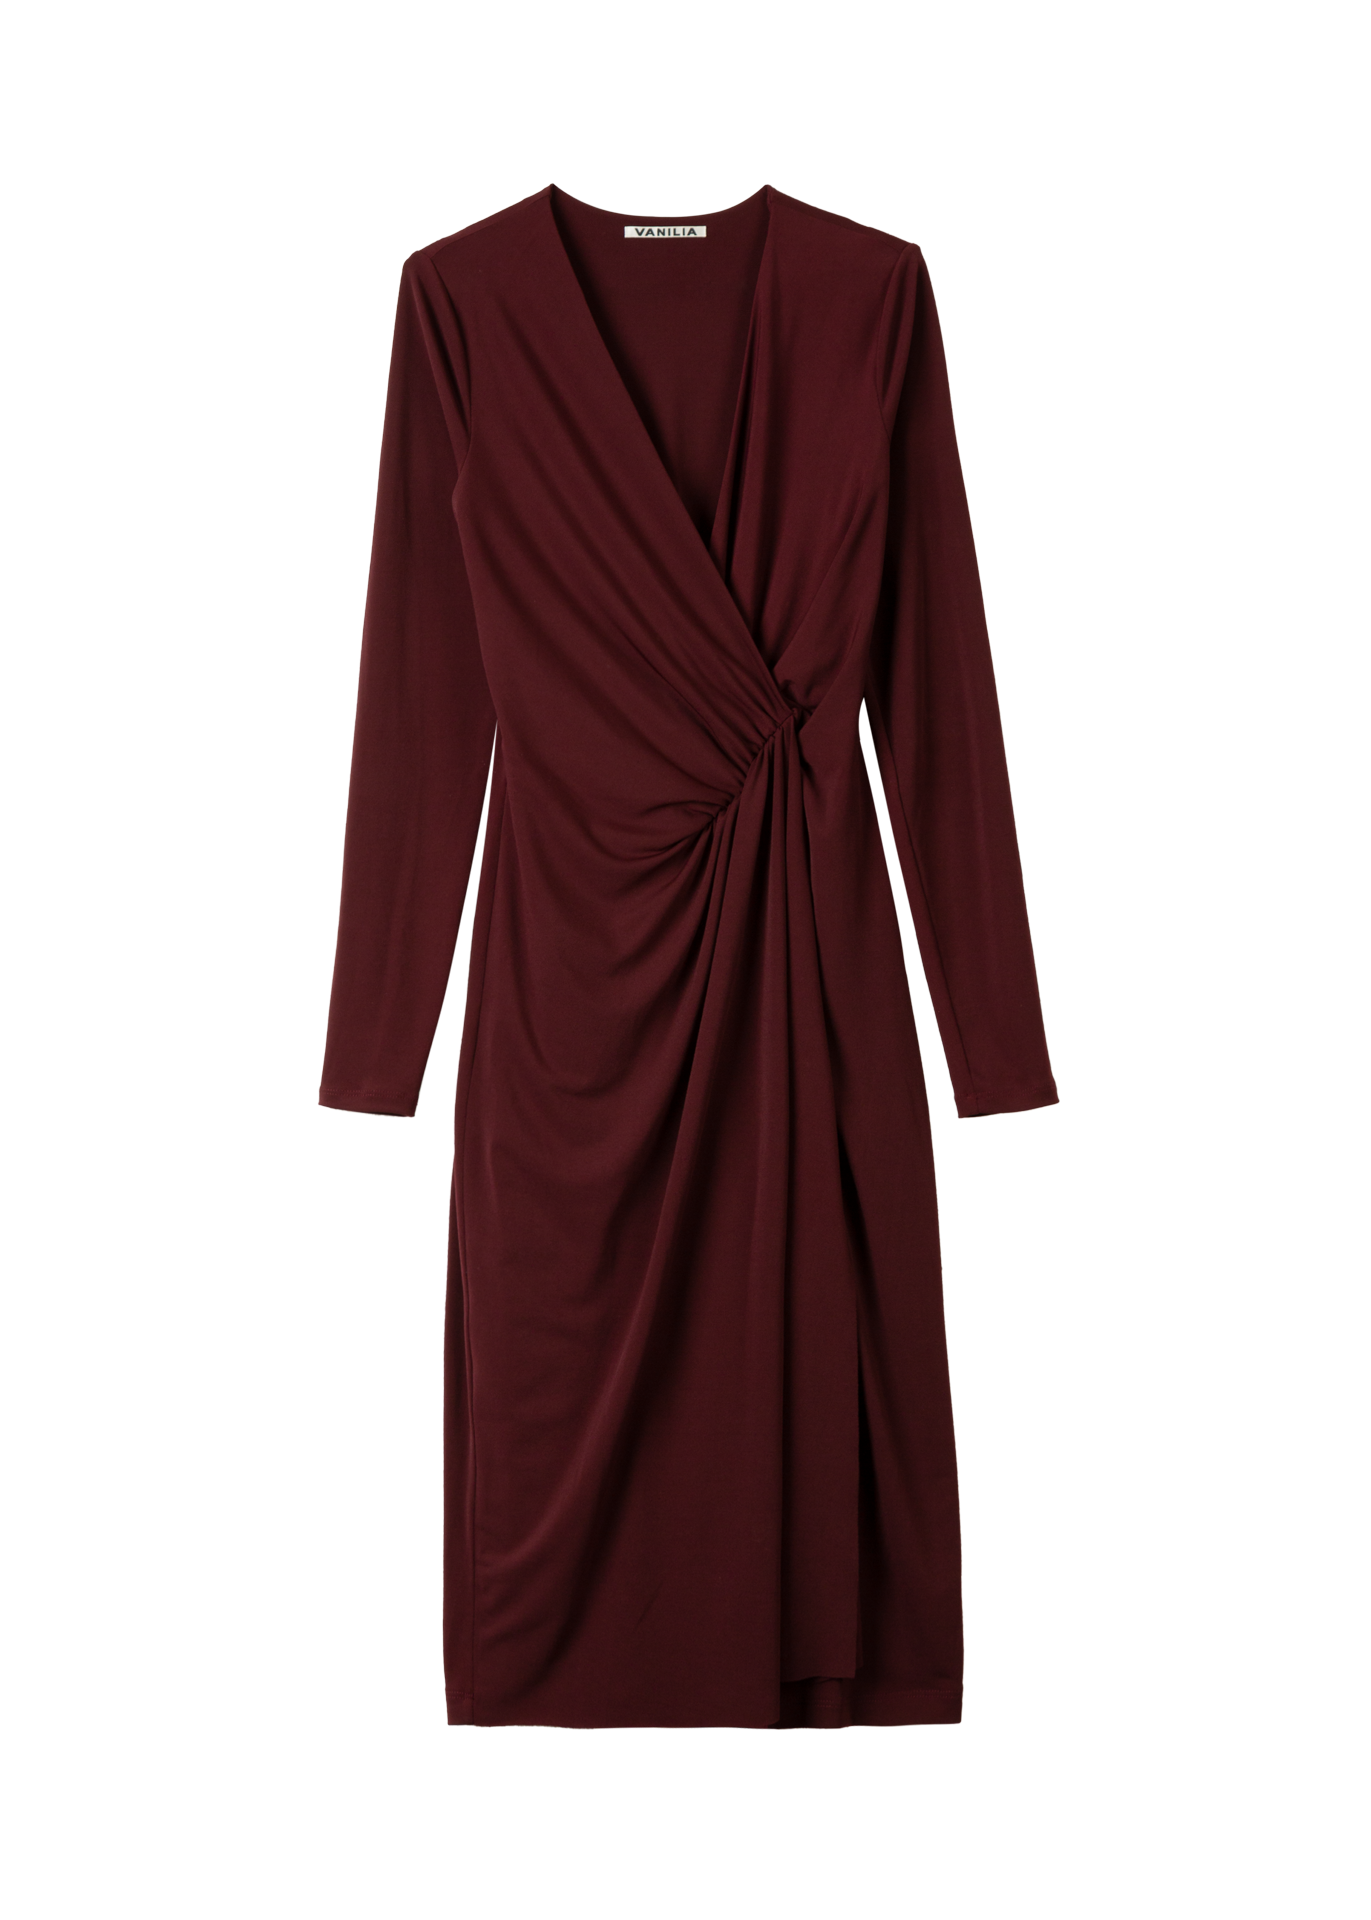 Pamflet etiket Kers Crepe jurk met drapering bordeaux rood | Bestel bij Vanilia.com